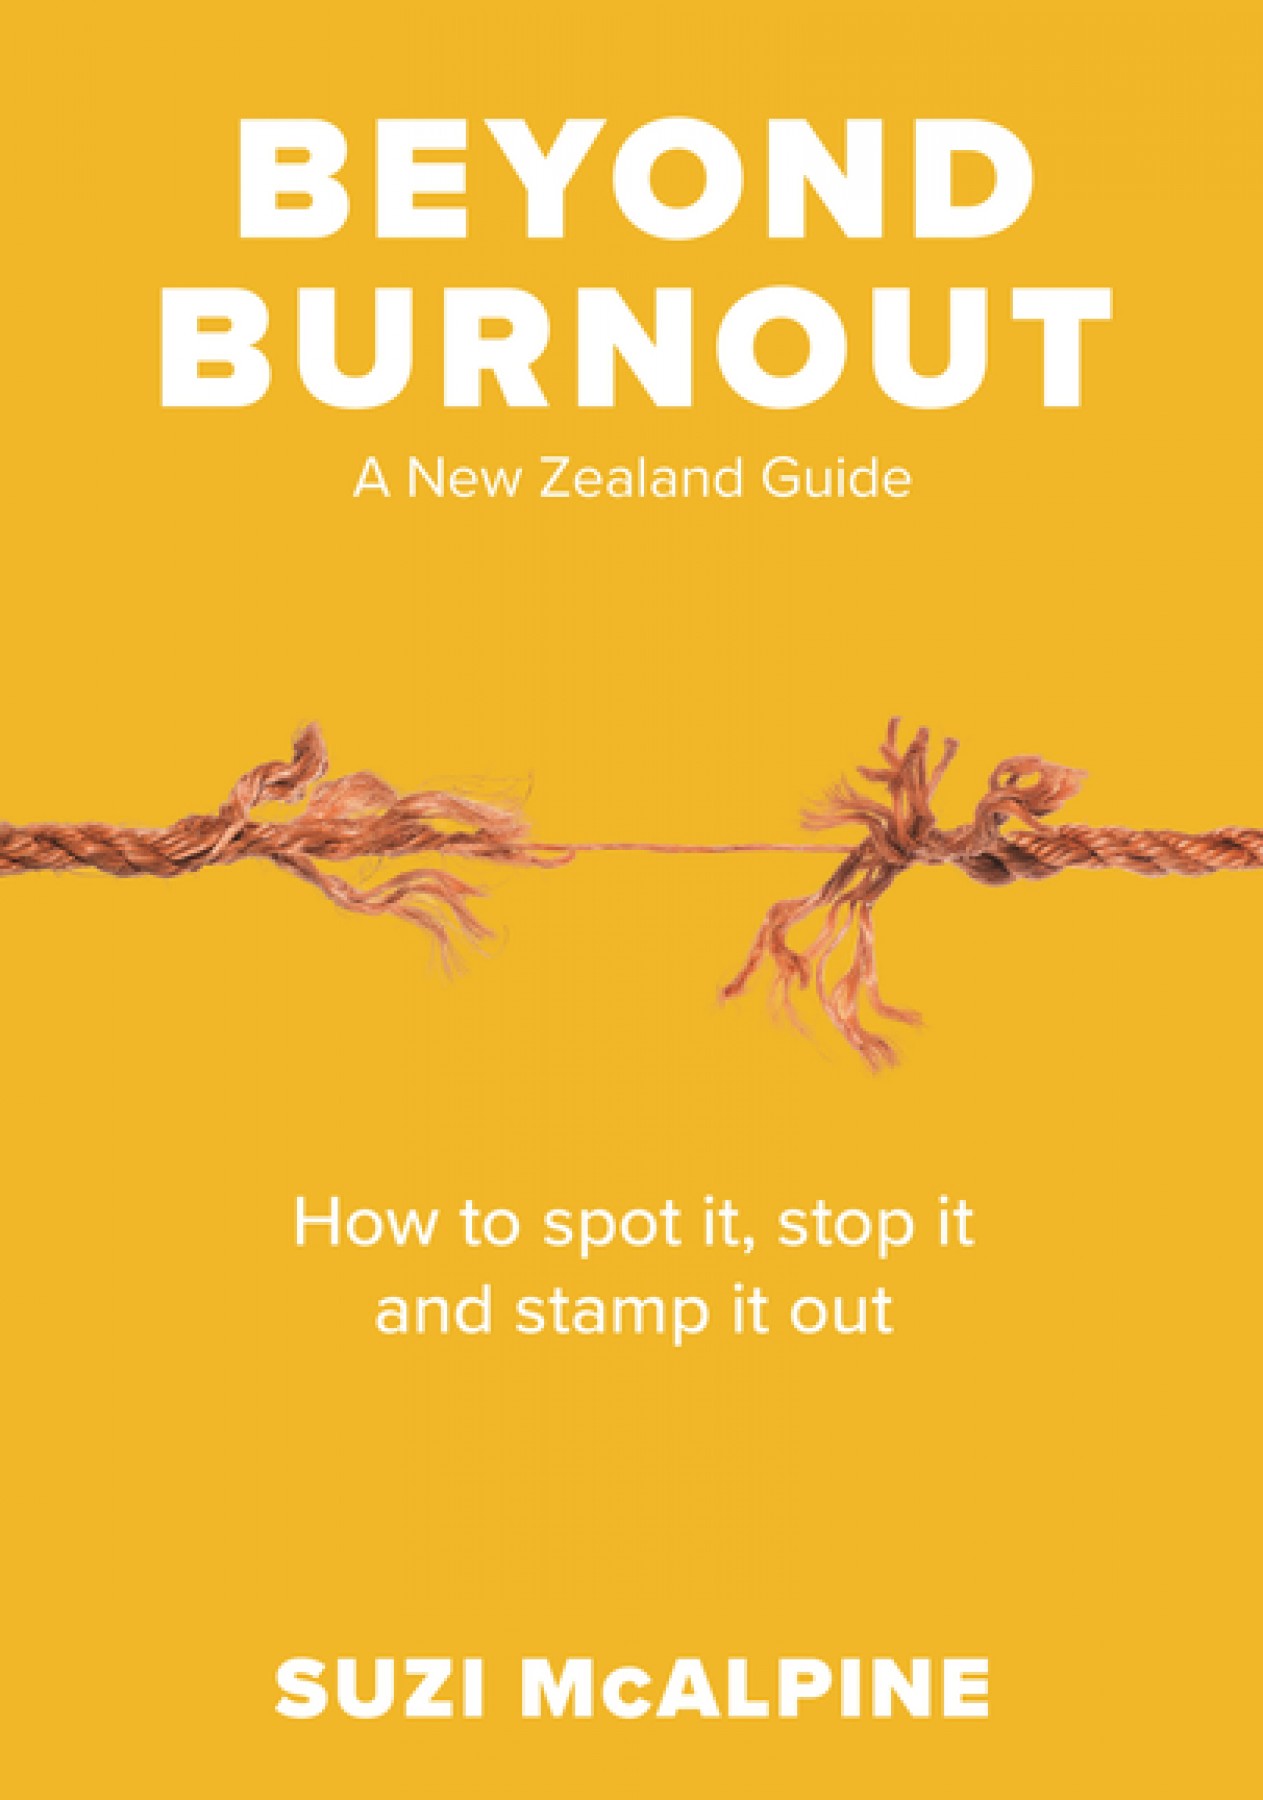 Beyond burnout: A New Zealand guide